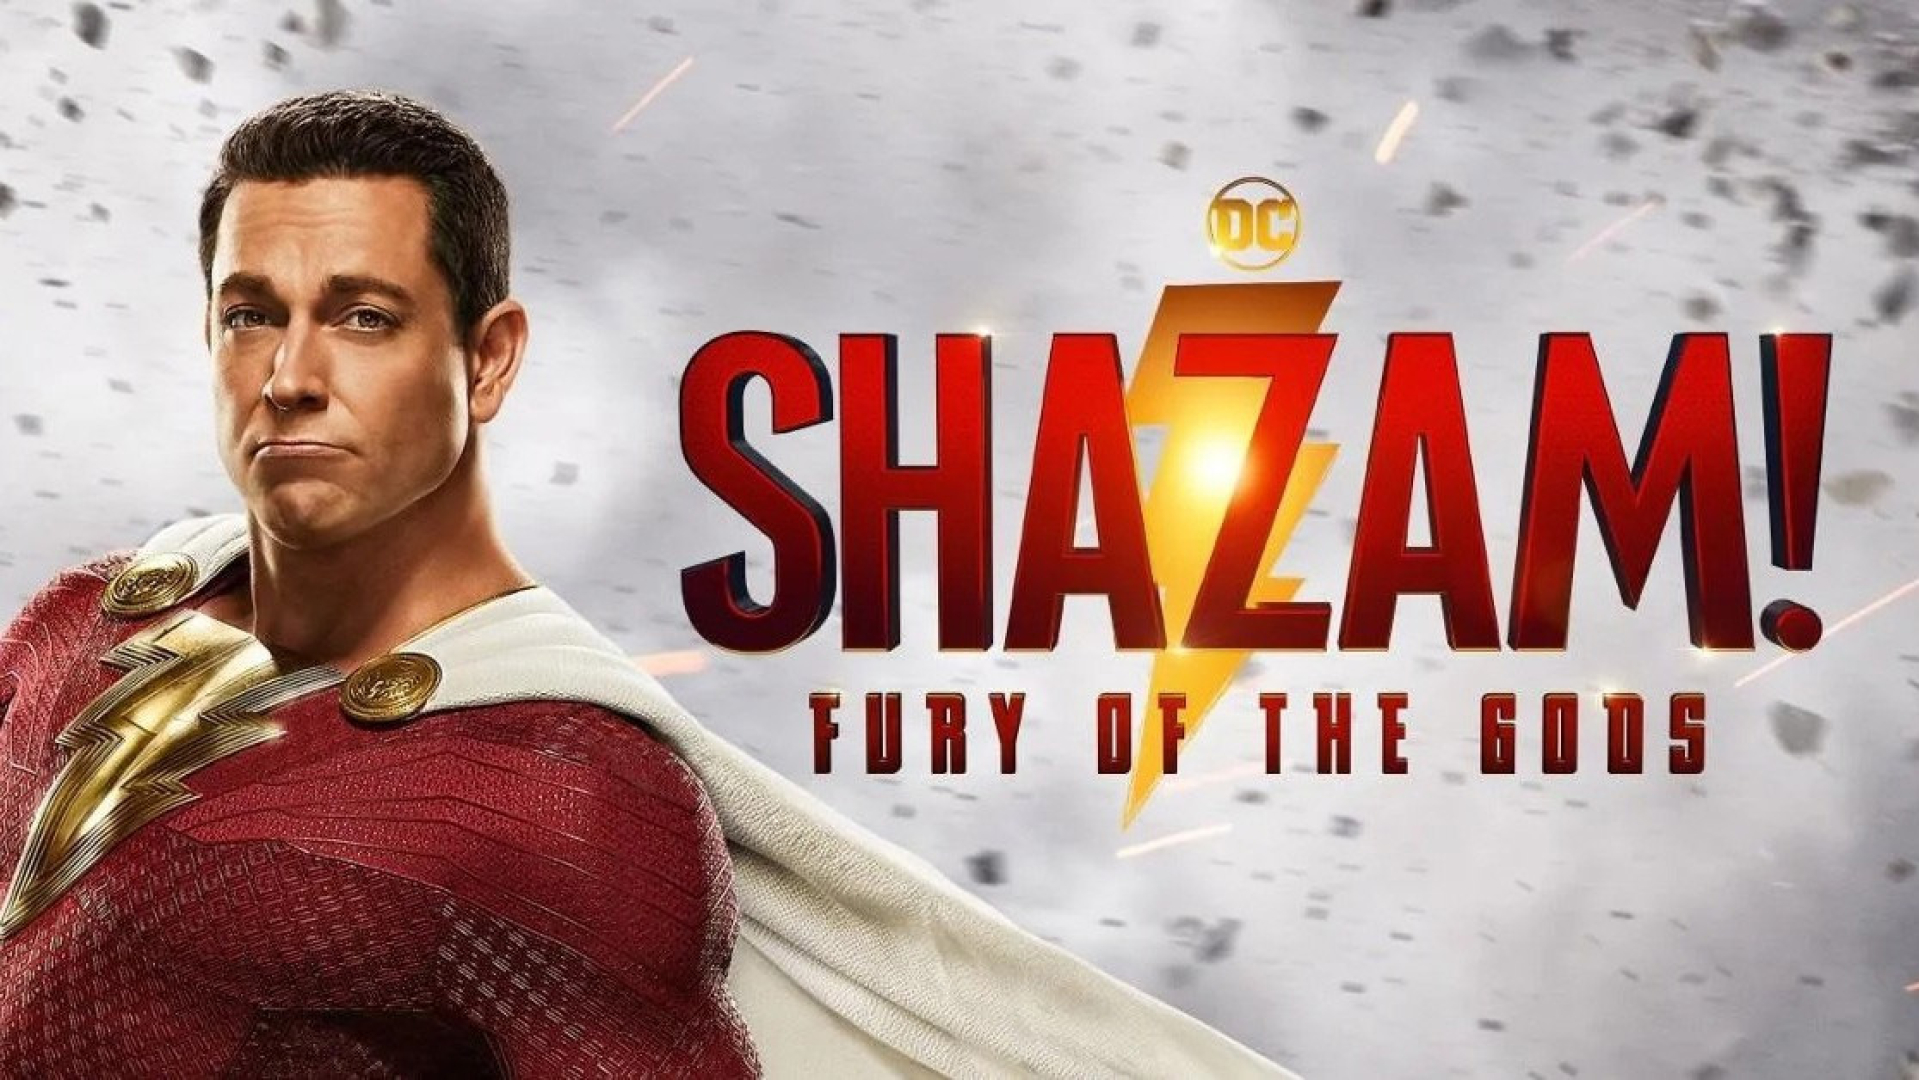 shazam-fury-of-the-gods-zachary-levi-poster